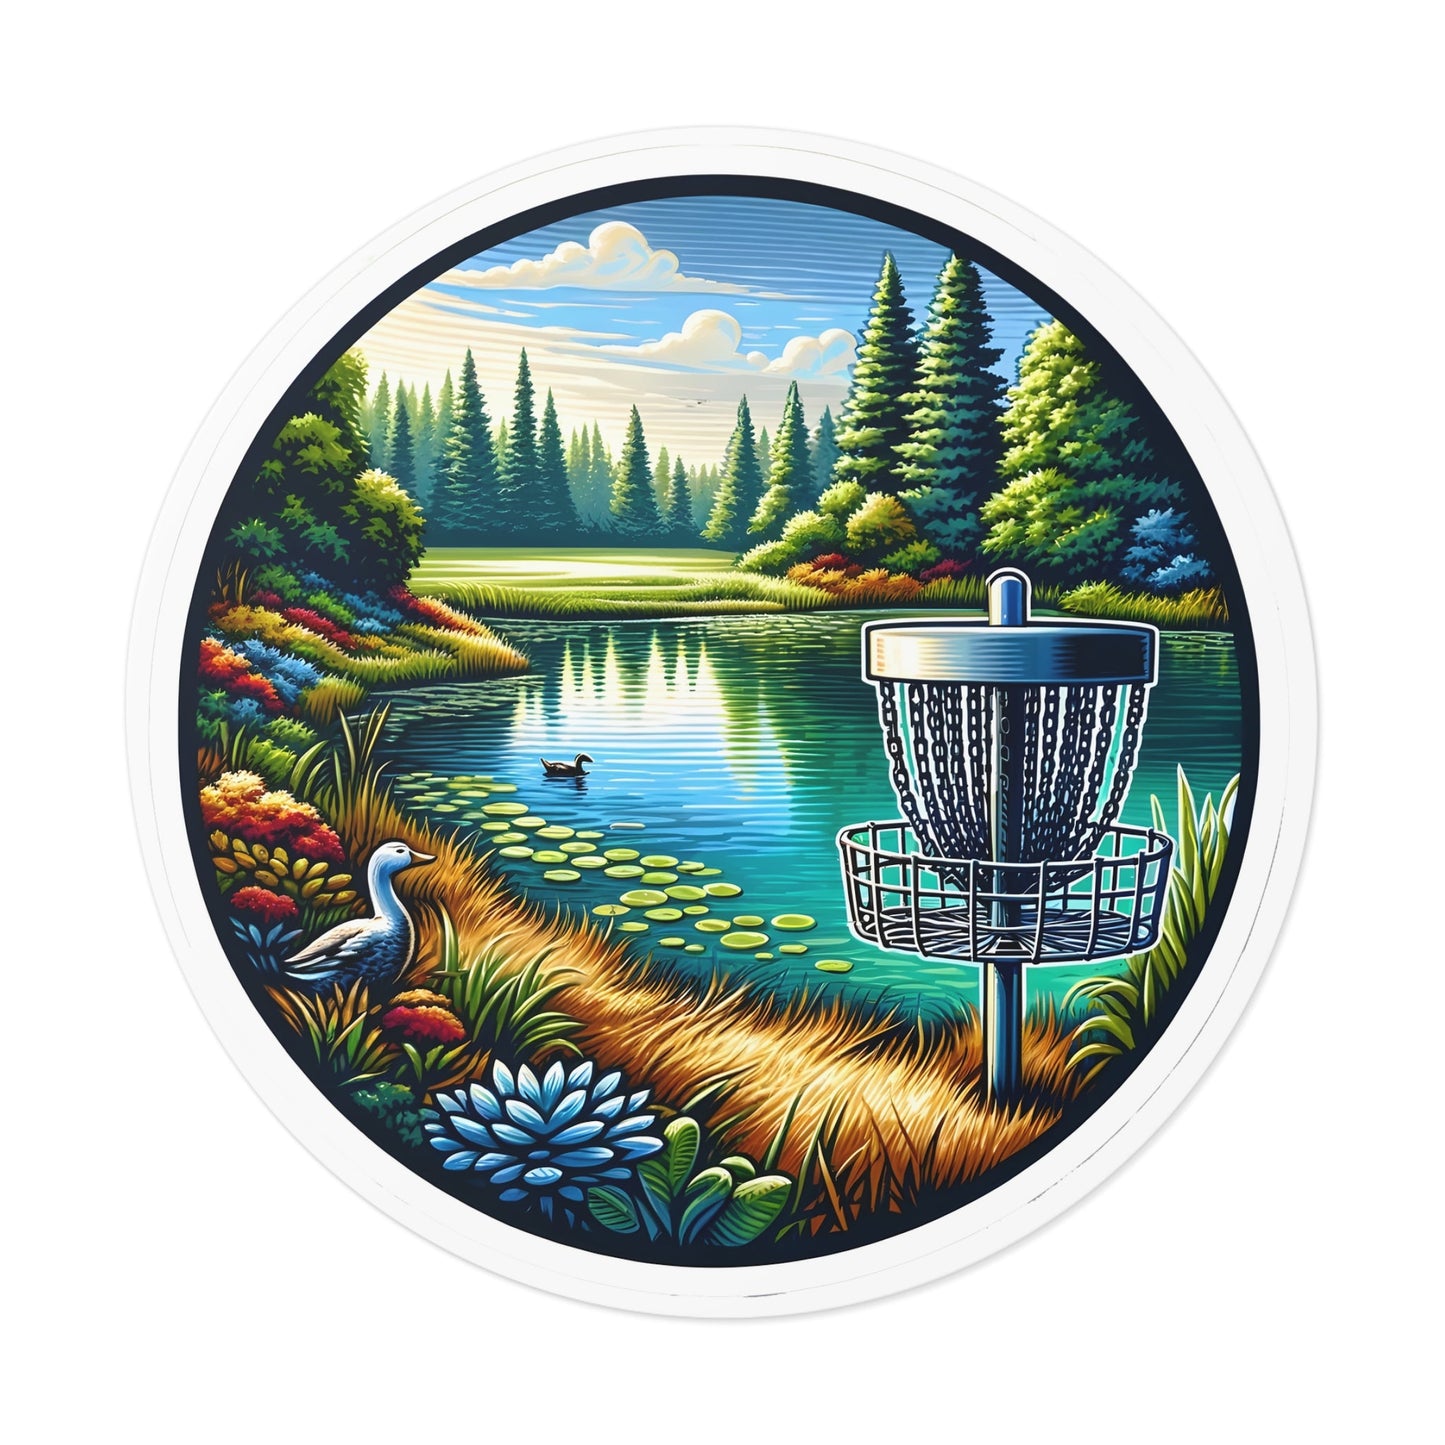 Disc Golf Basket by Pond v3 - Round Vinyl Stickers - Quirky Goodies